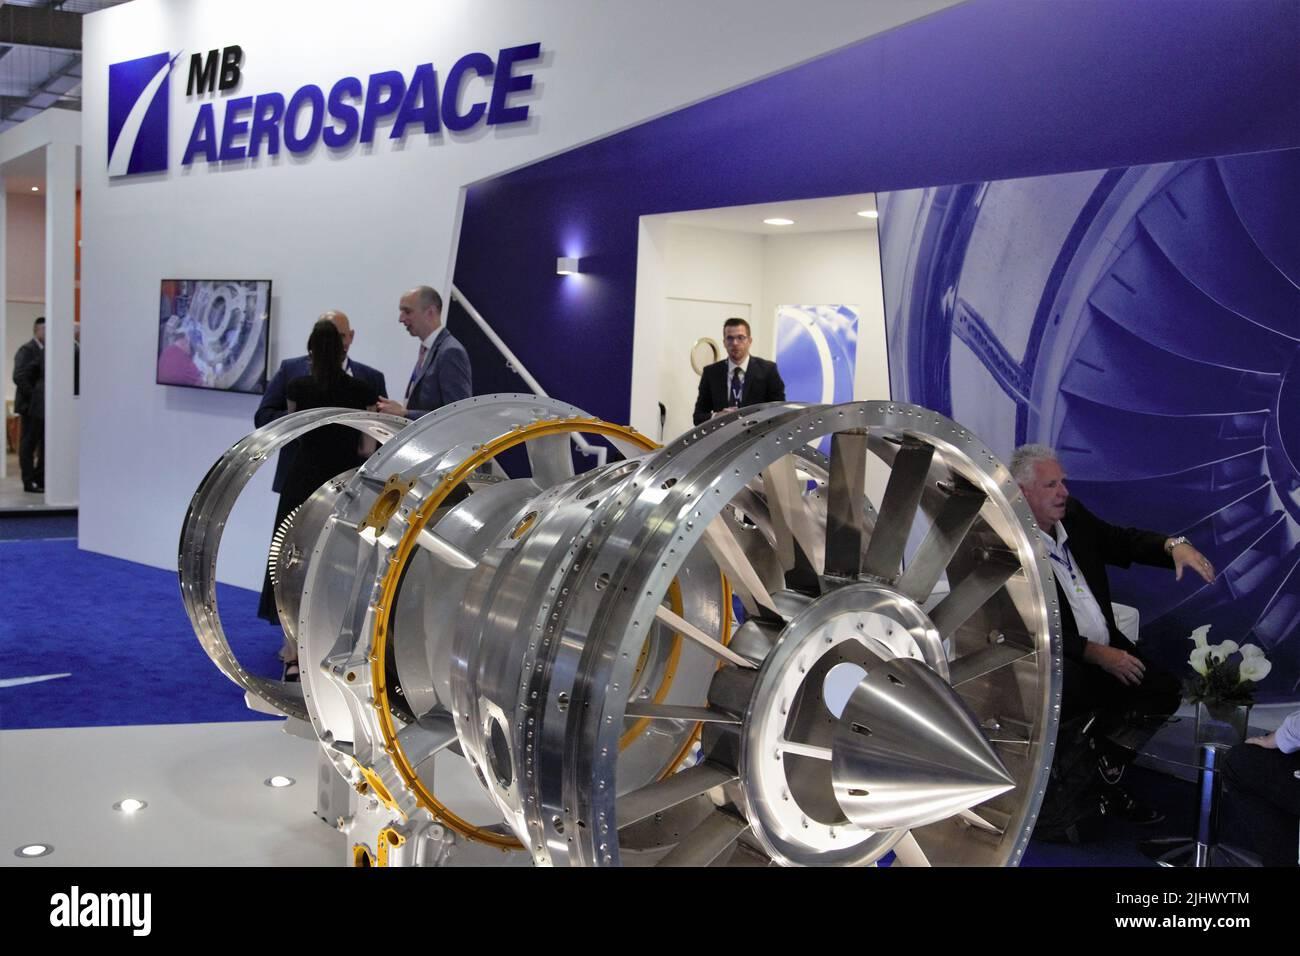 MB Aerospace engine components